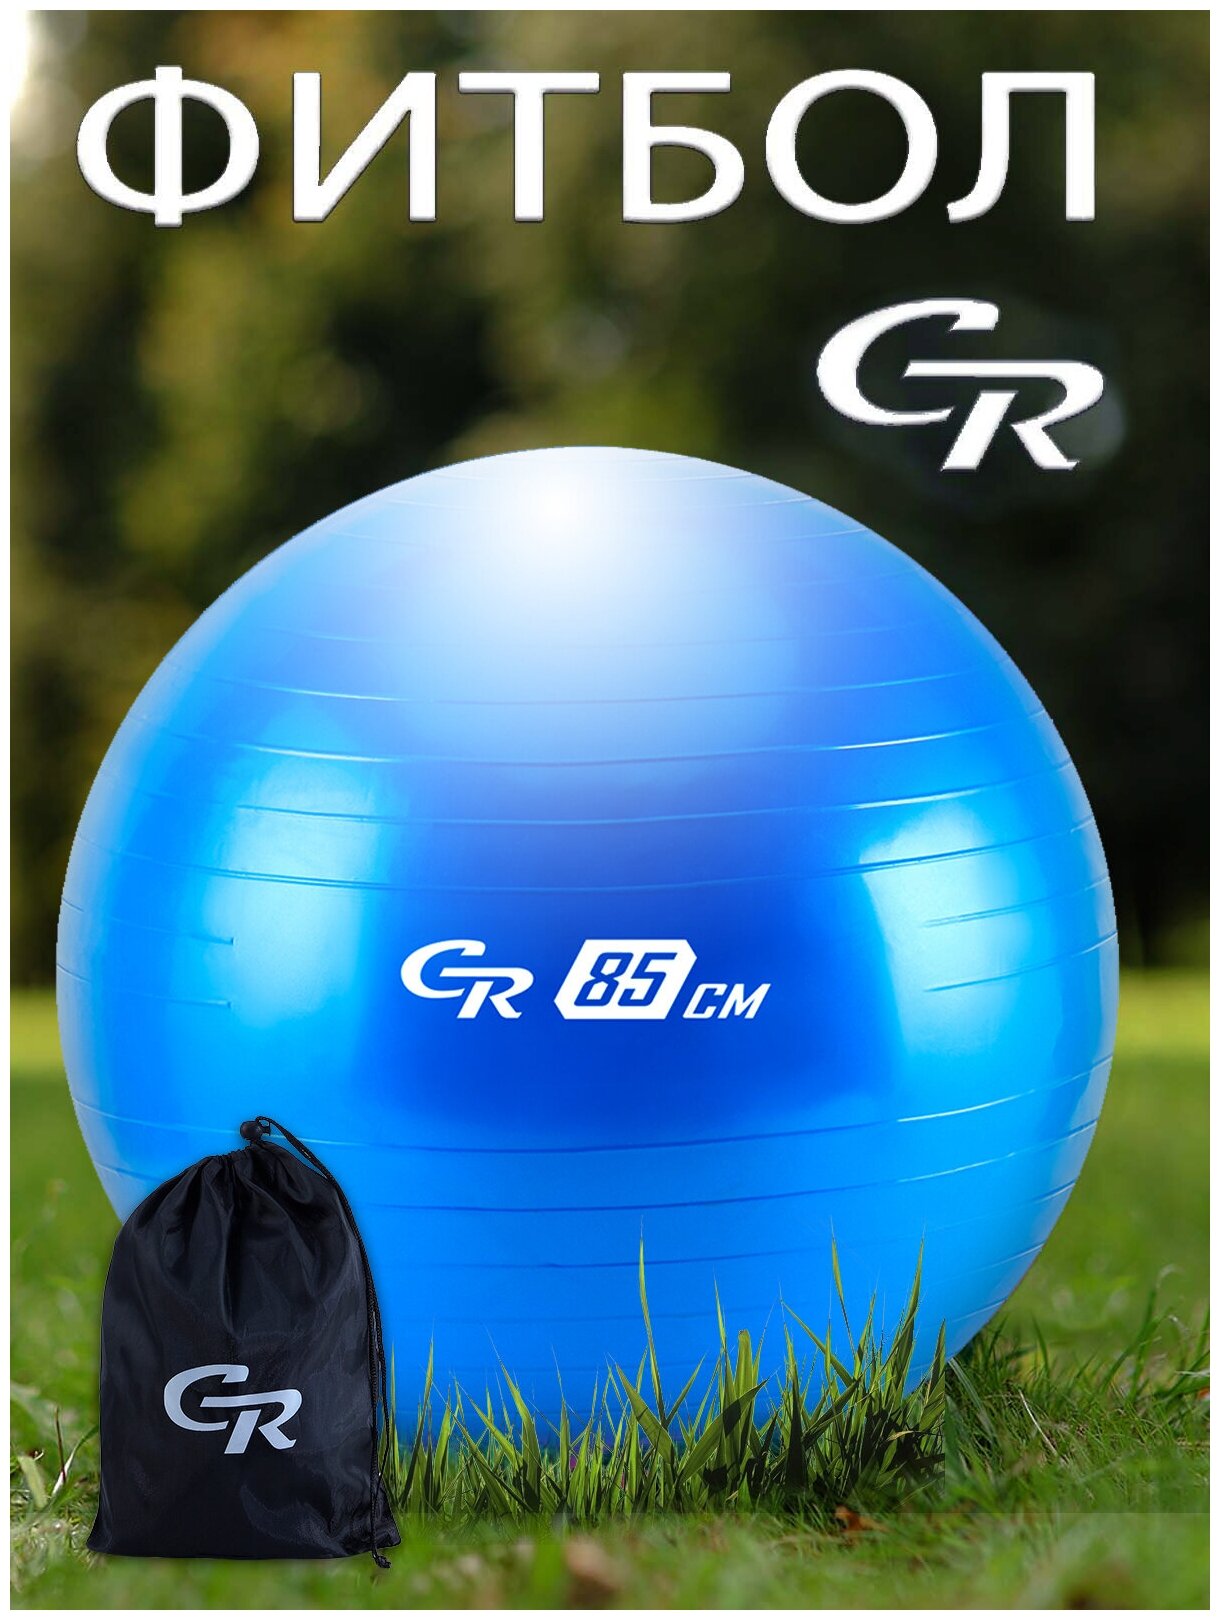 Мяч гимнастический, фитбол, для фитнеса, для занятий спортом, диаметр 85 см, ПВХ, в сумке, синий, JB0210541